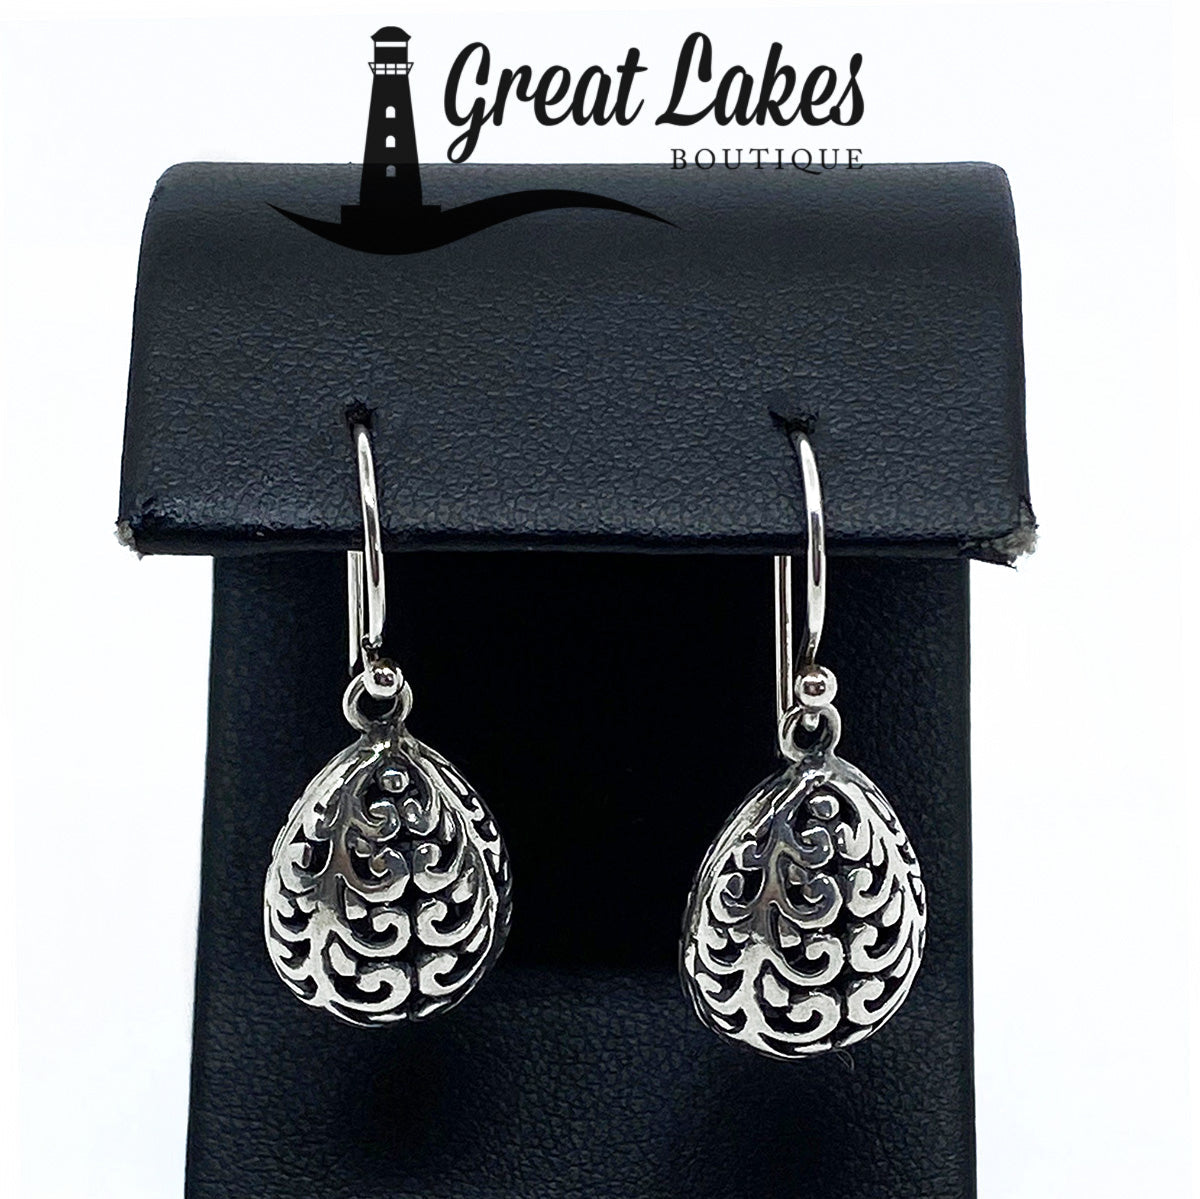 Great Lakes Boutique Silver Filigree Dangle Earrings